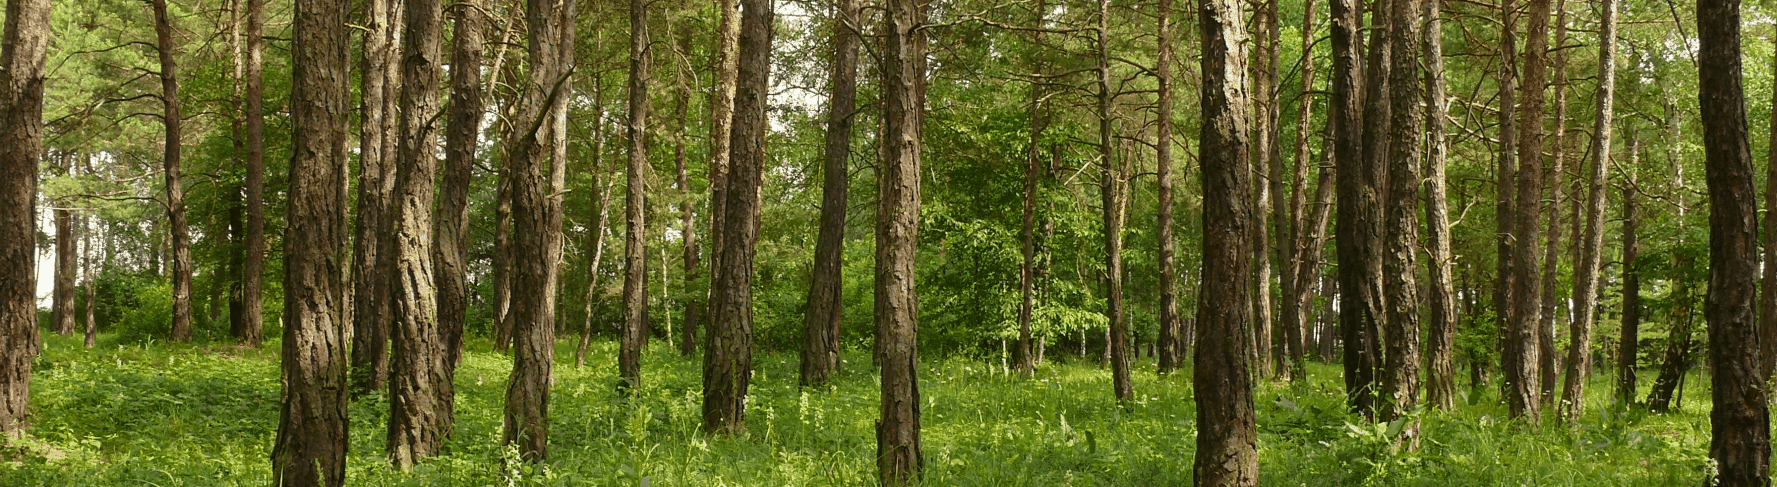 Pralesy ČR